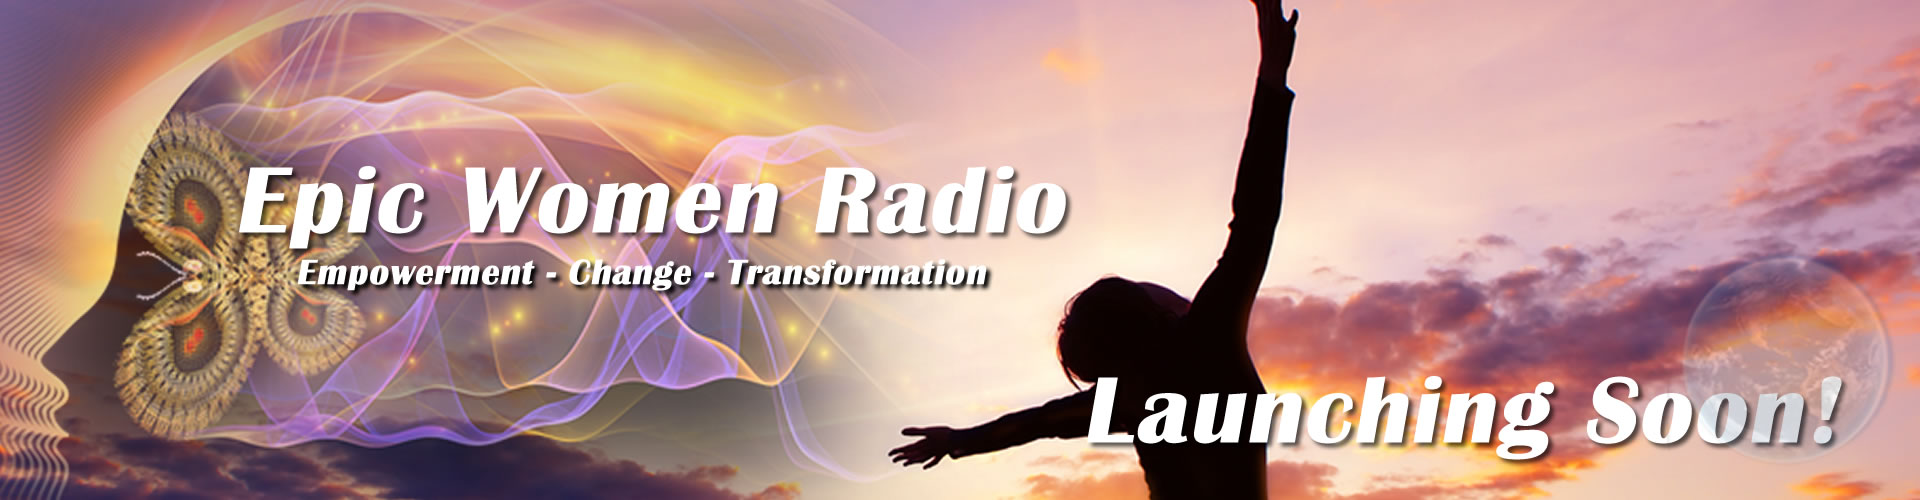 Epic Women Radio - The Transformation Network